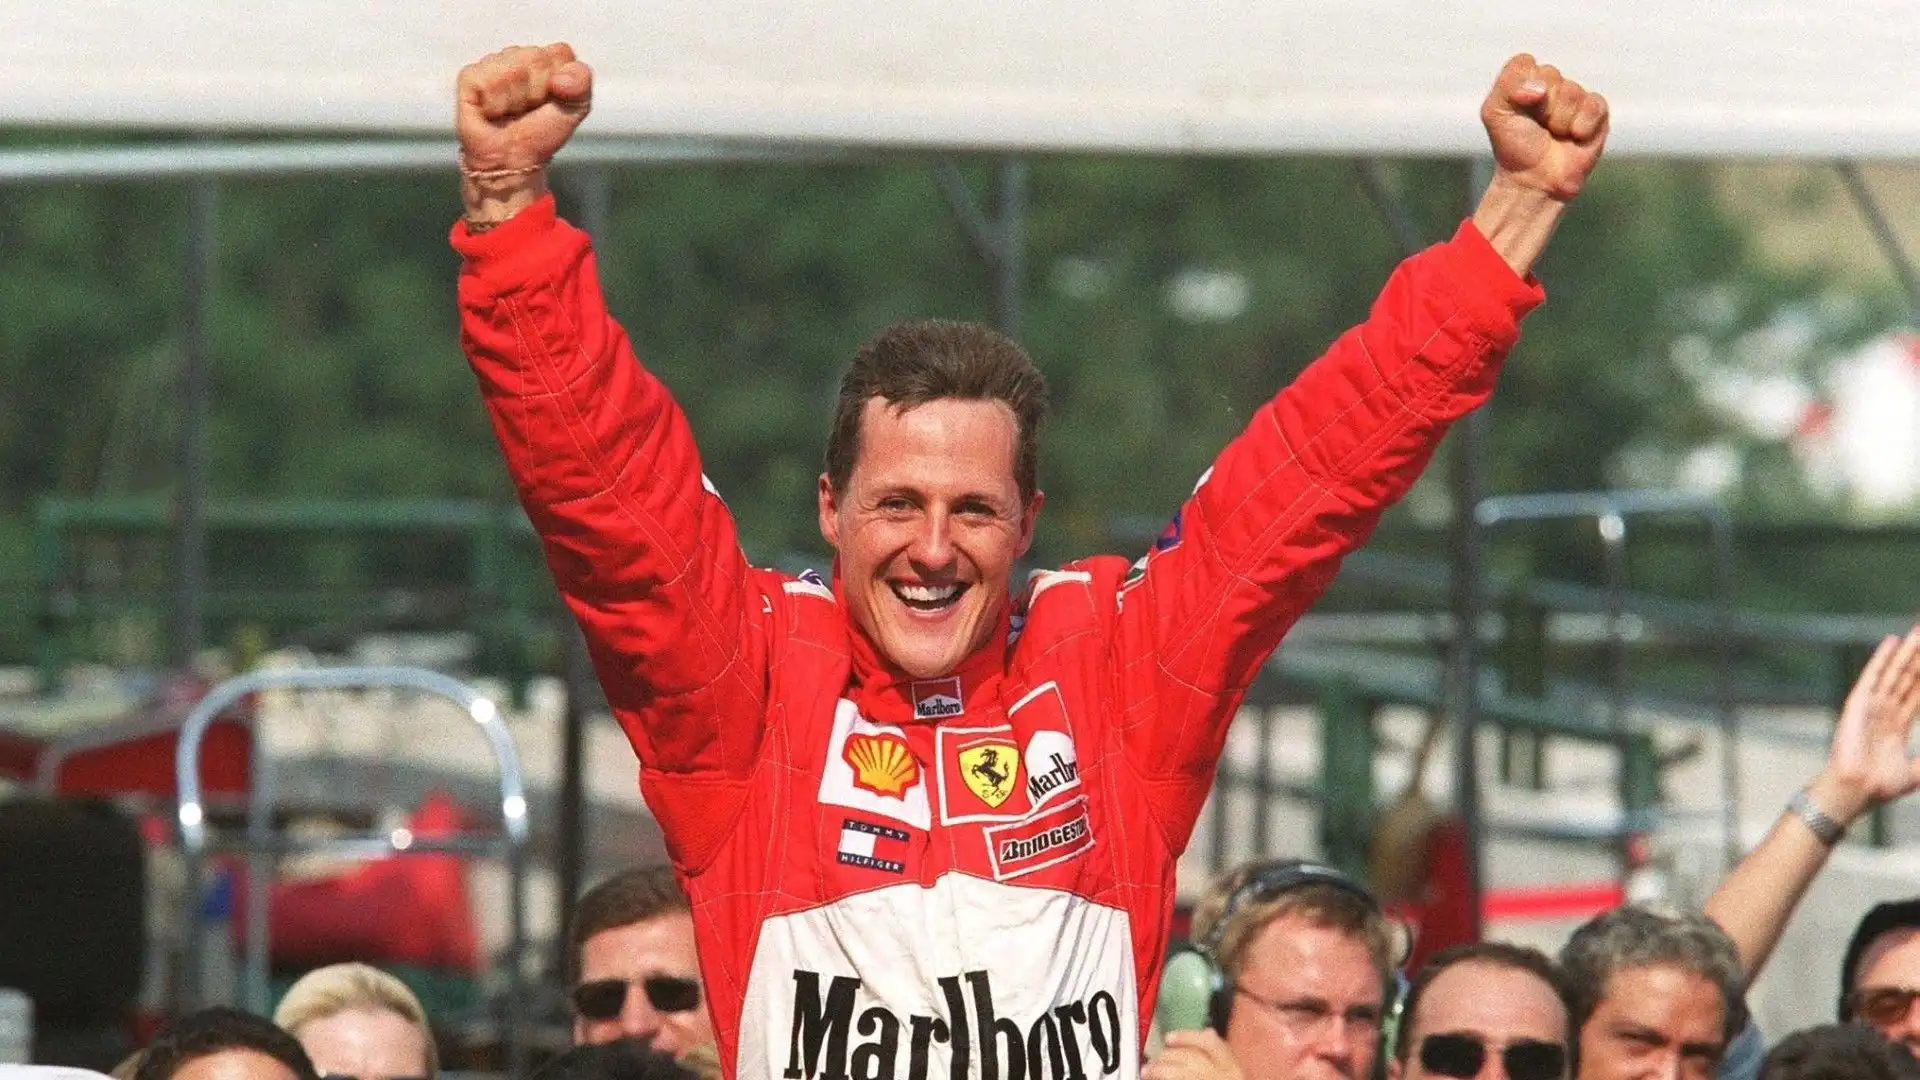 2- Michael Schumacher